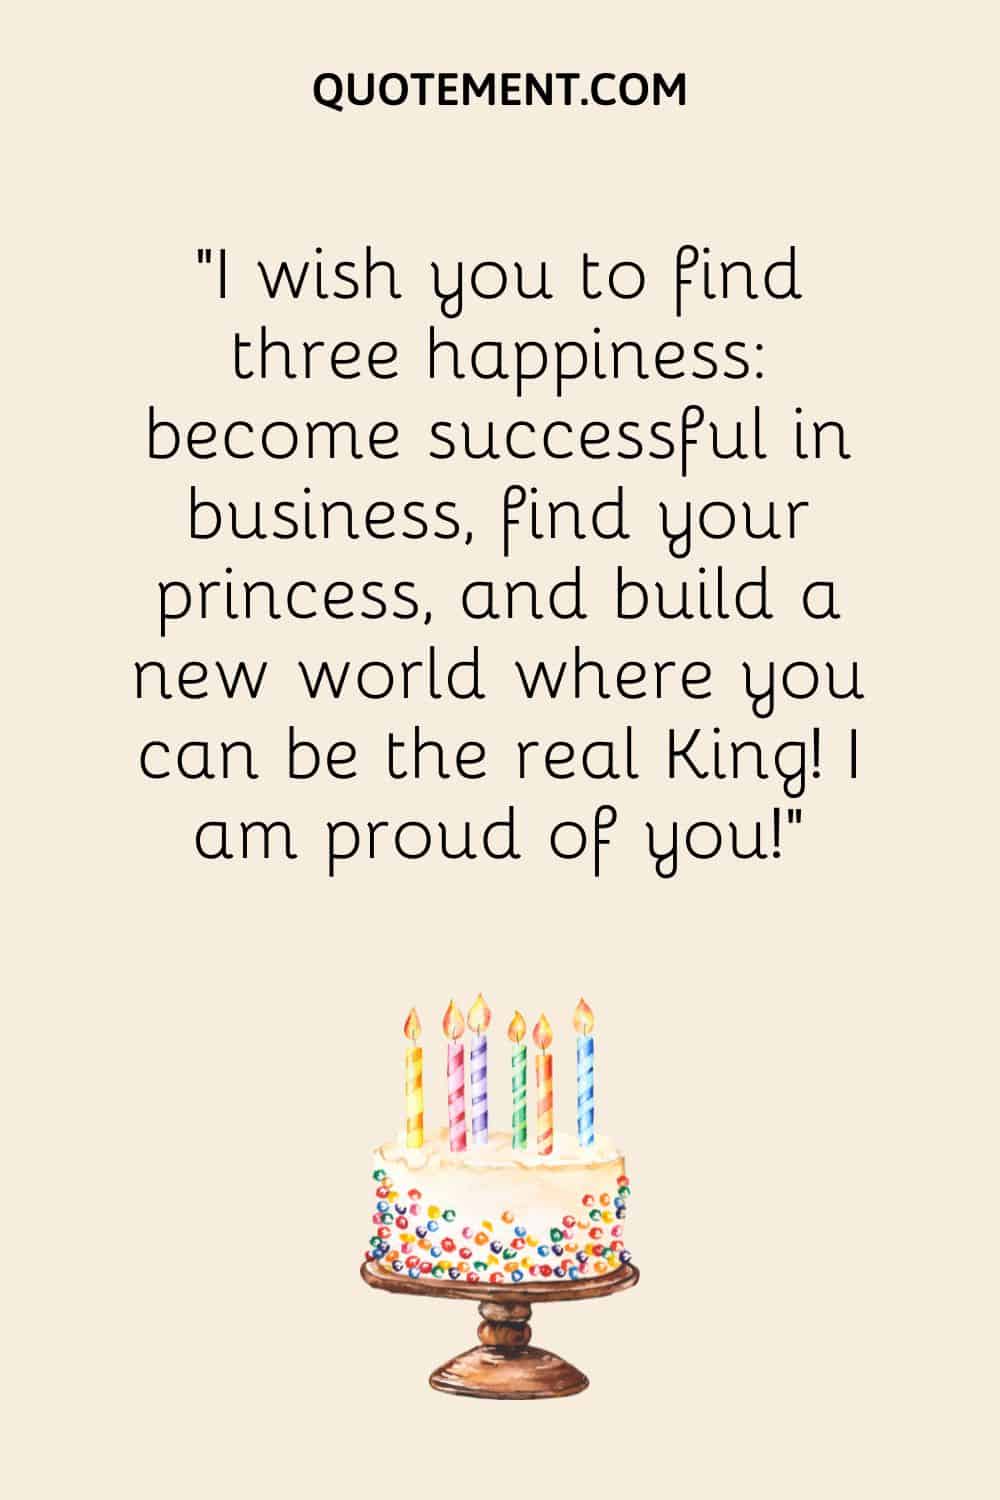 image of birthday cake representing godson birthday wish.